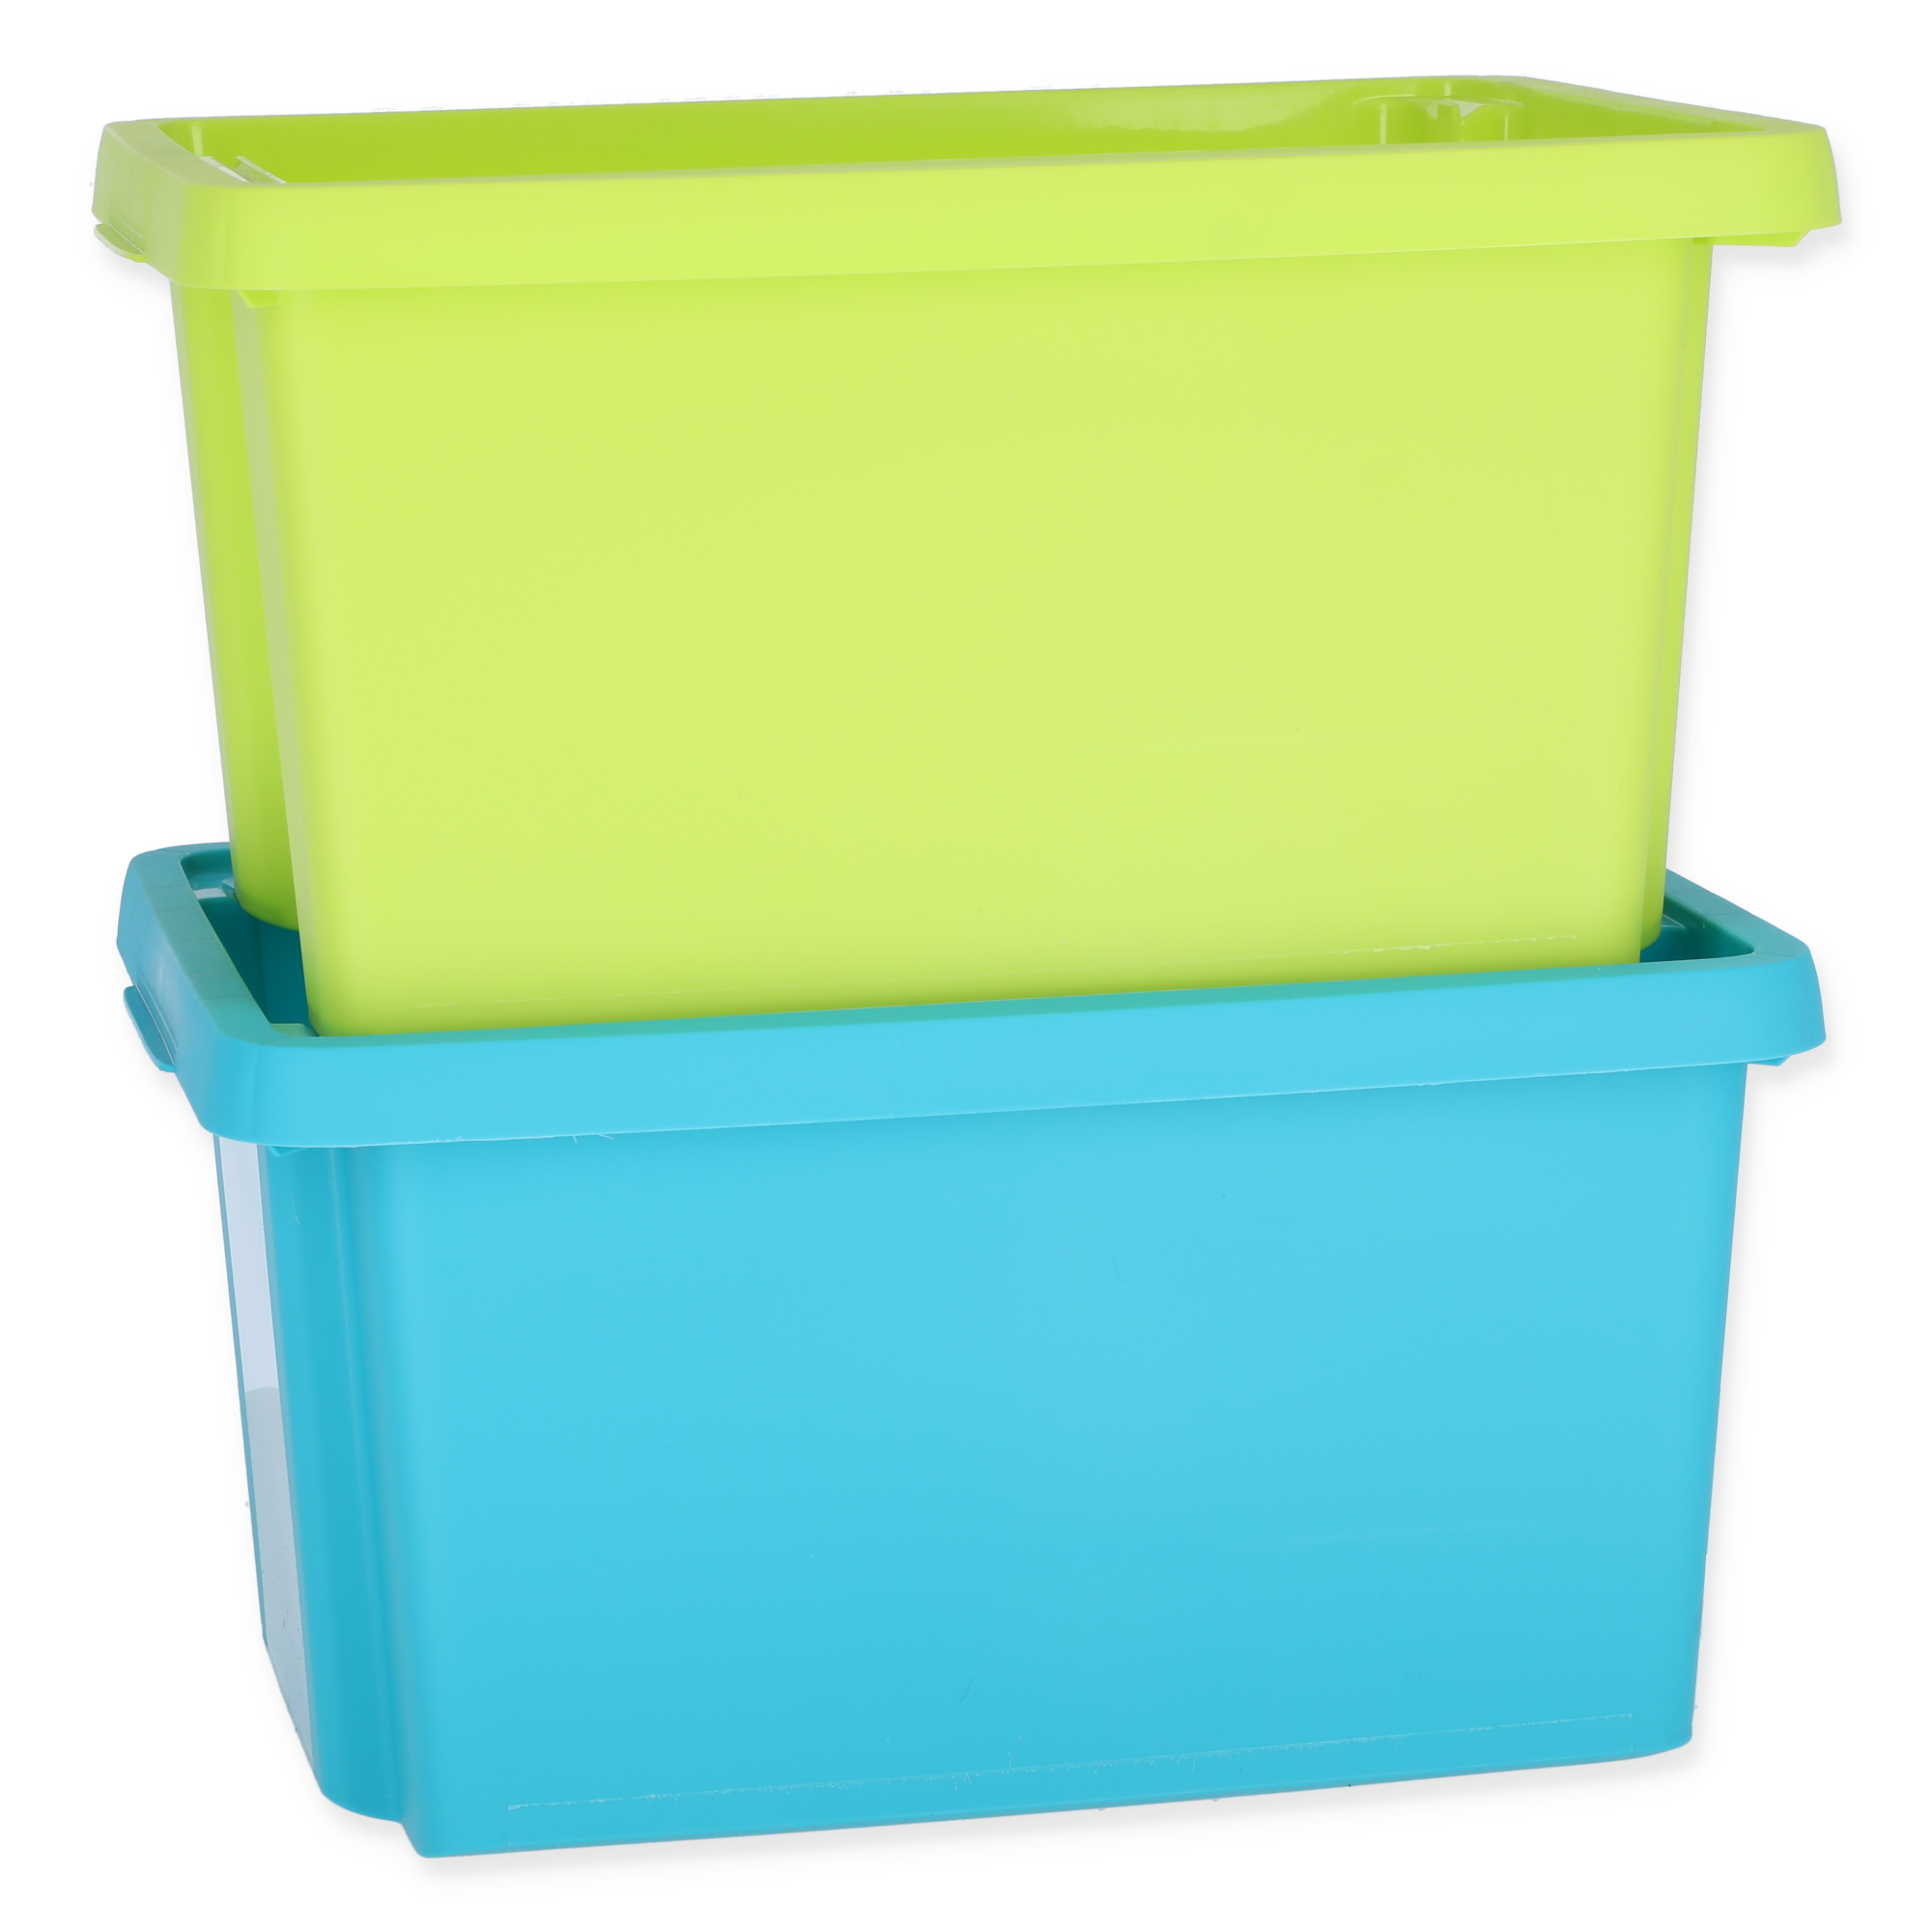 Drehstapelbox 'Essentials' blau 29,5 x 20,3 x 39 cm 16 l + product picture